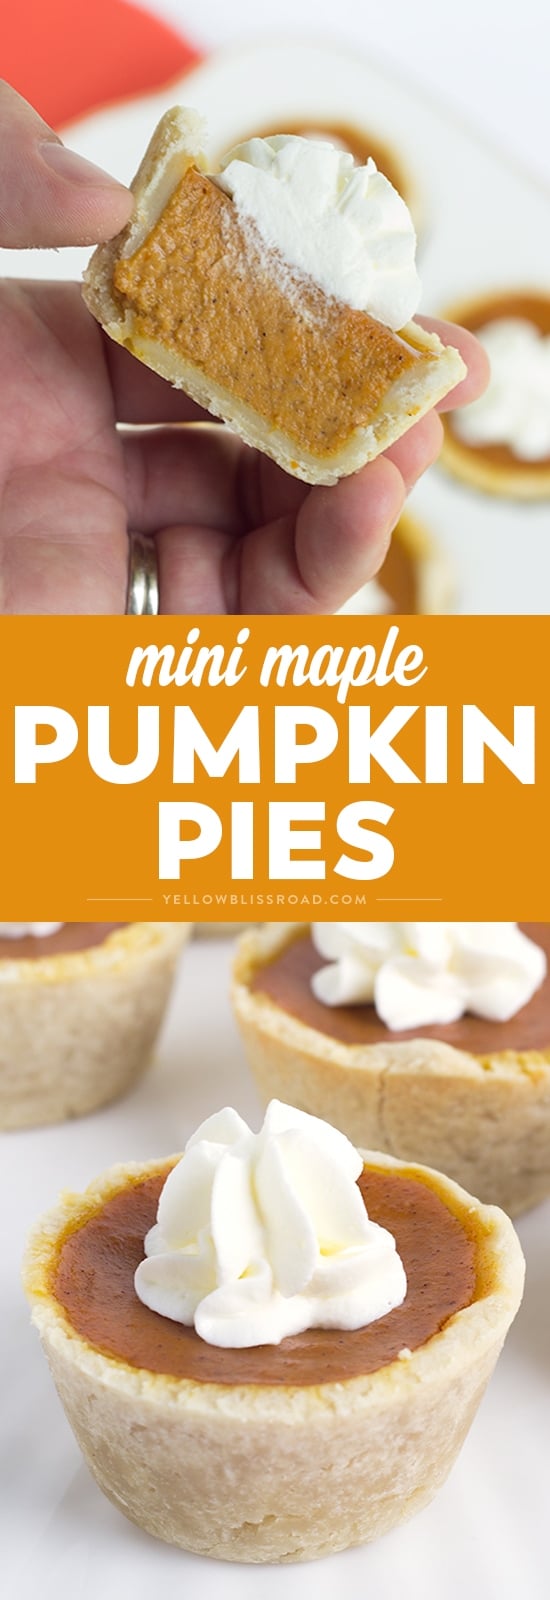 Social media image of Mini Maple Pumpkin Pies